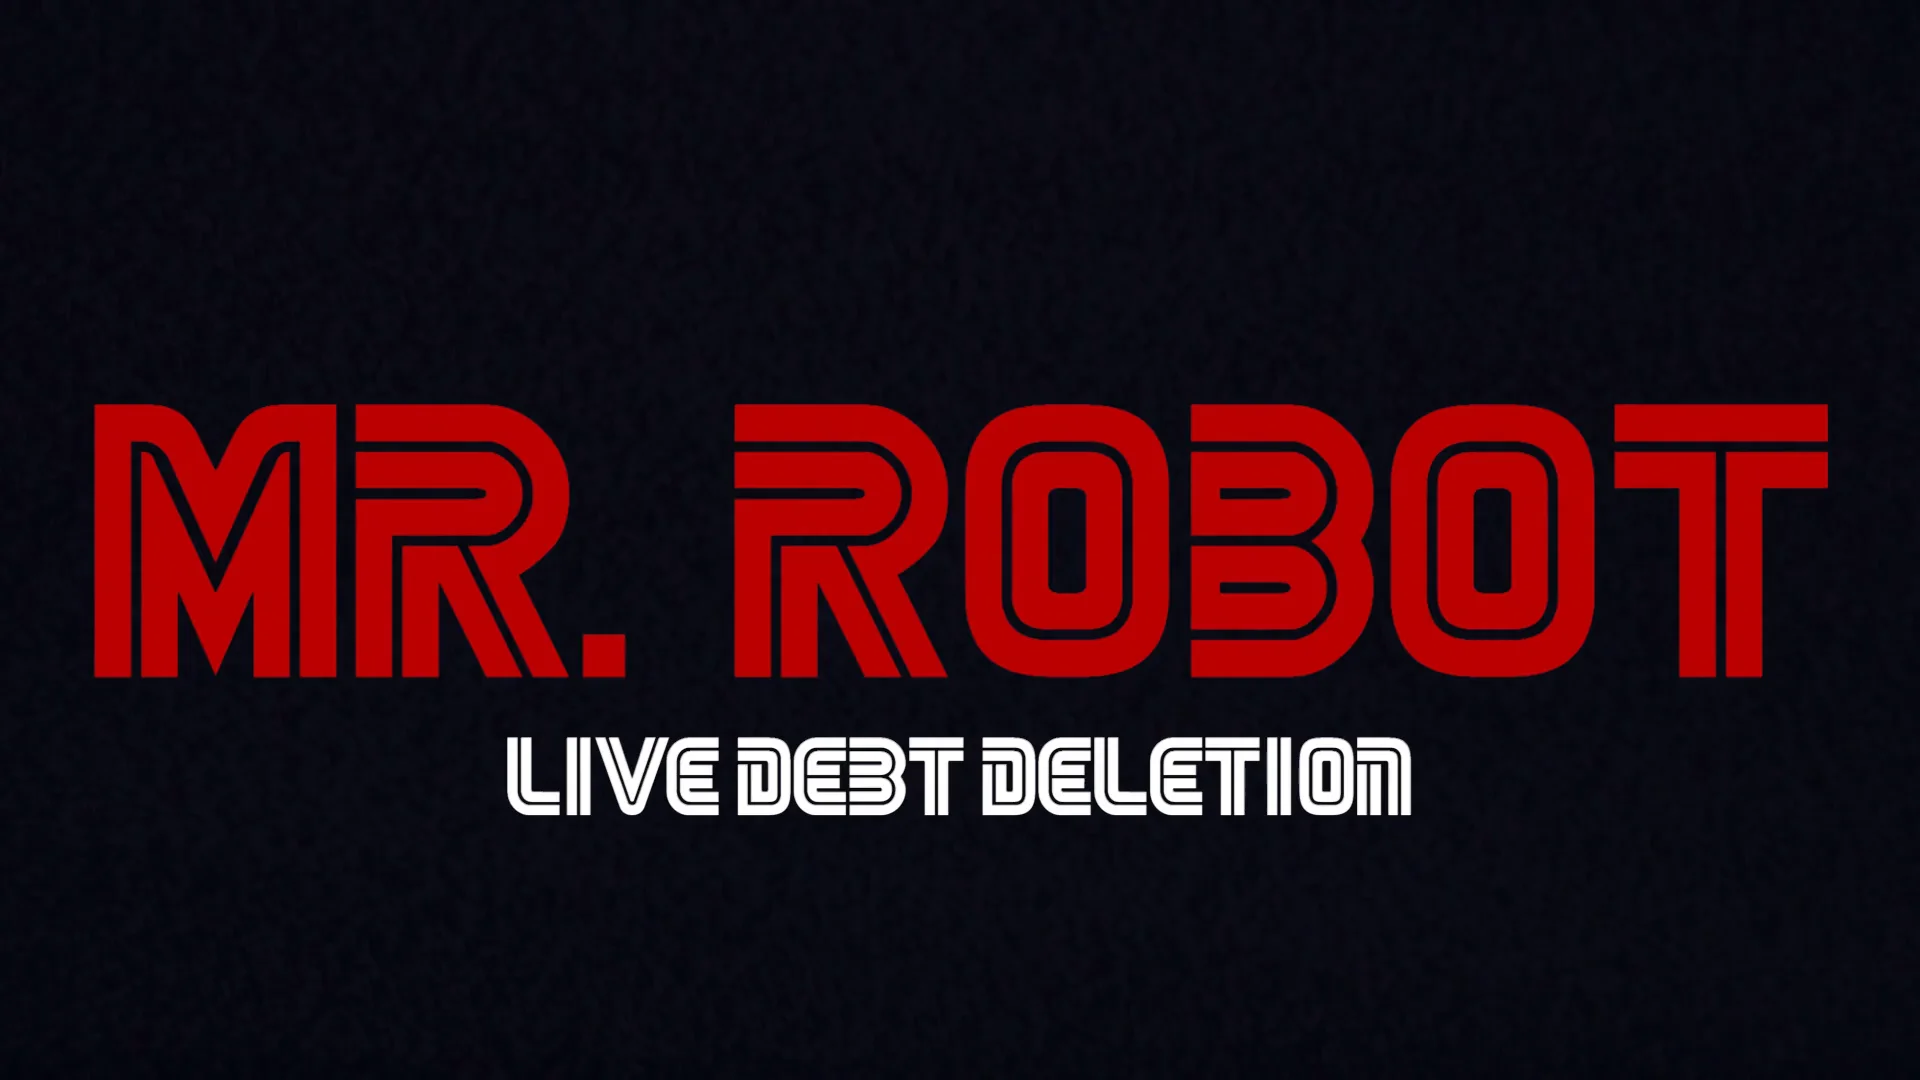 NBC Universal, Mr. Robot Debt Deletion Campaign